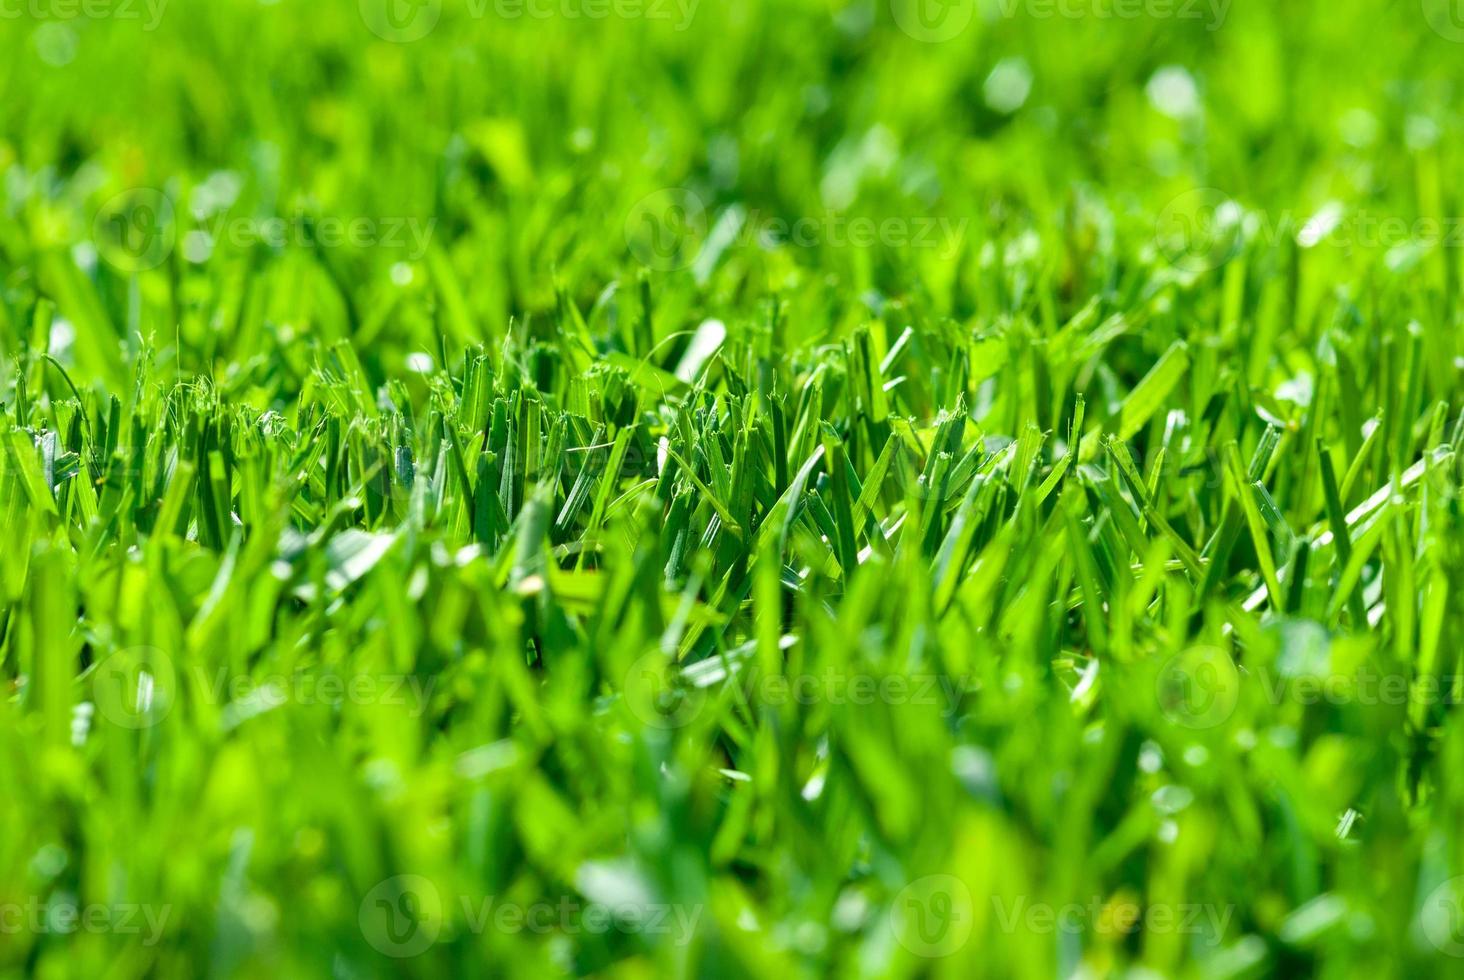 frisch Schnitt Gras, Makro niedrig Winkel Schuss mit selektiv Fokus foto